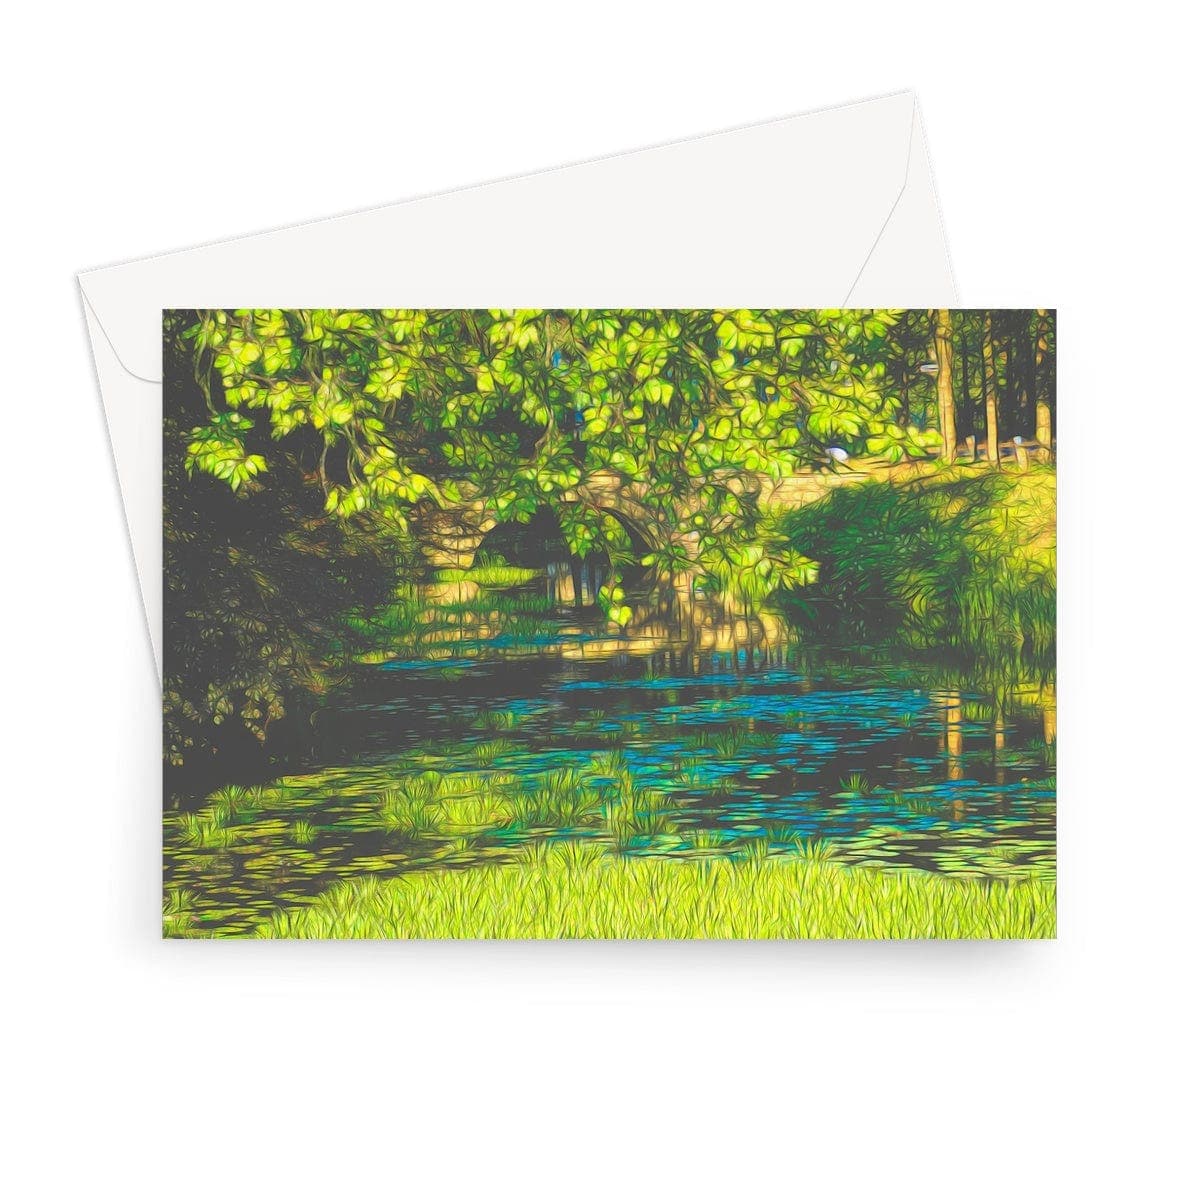 Hidden bridge, Art on a  Greeting Card, by Sensus Studio